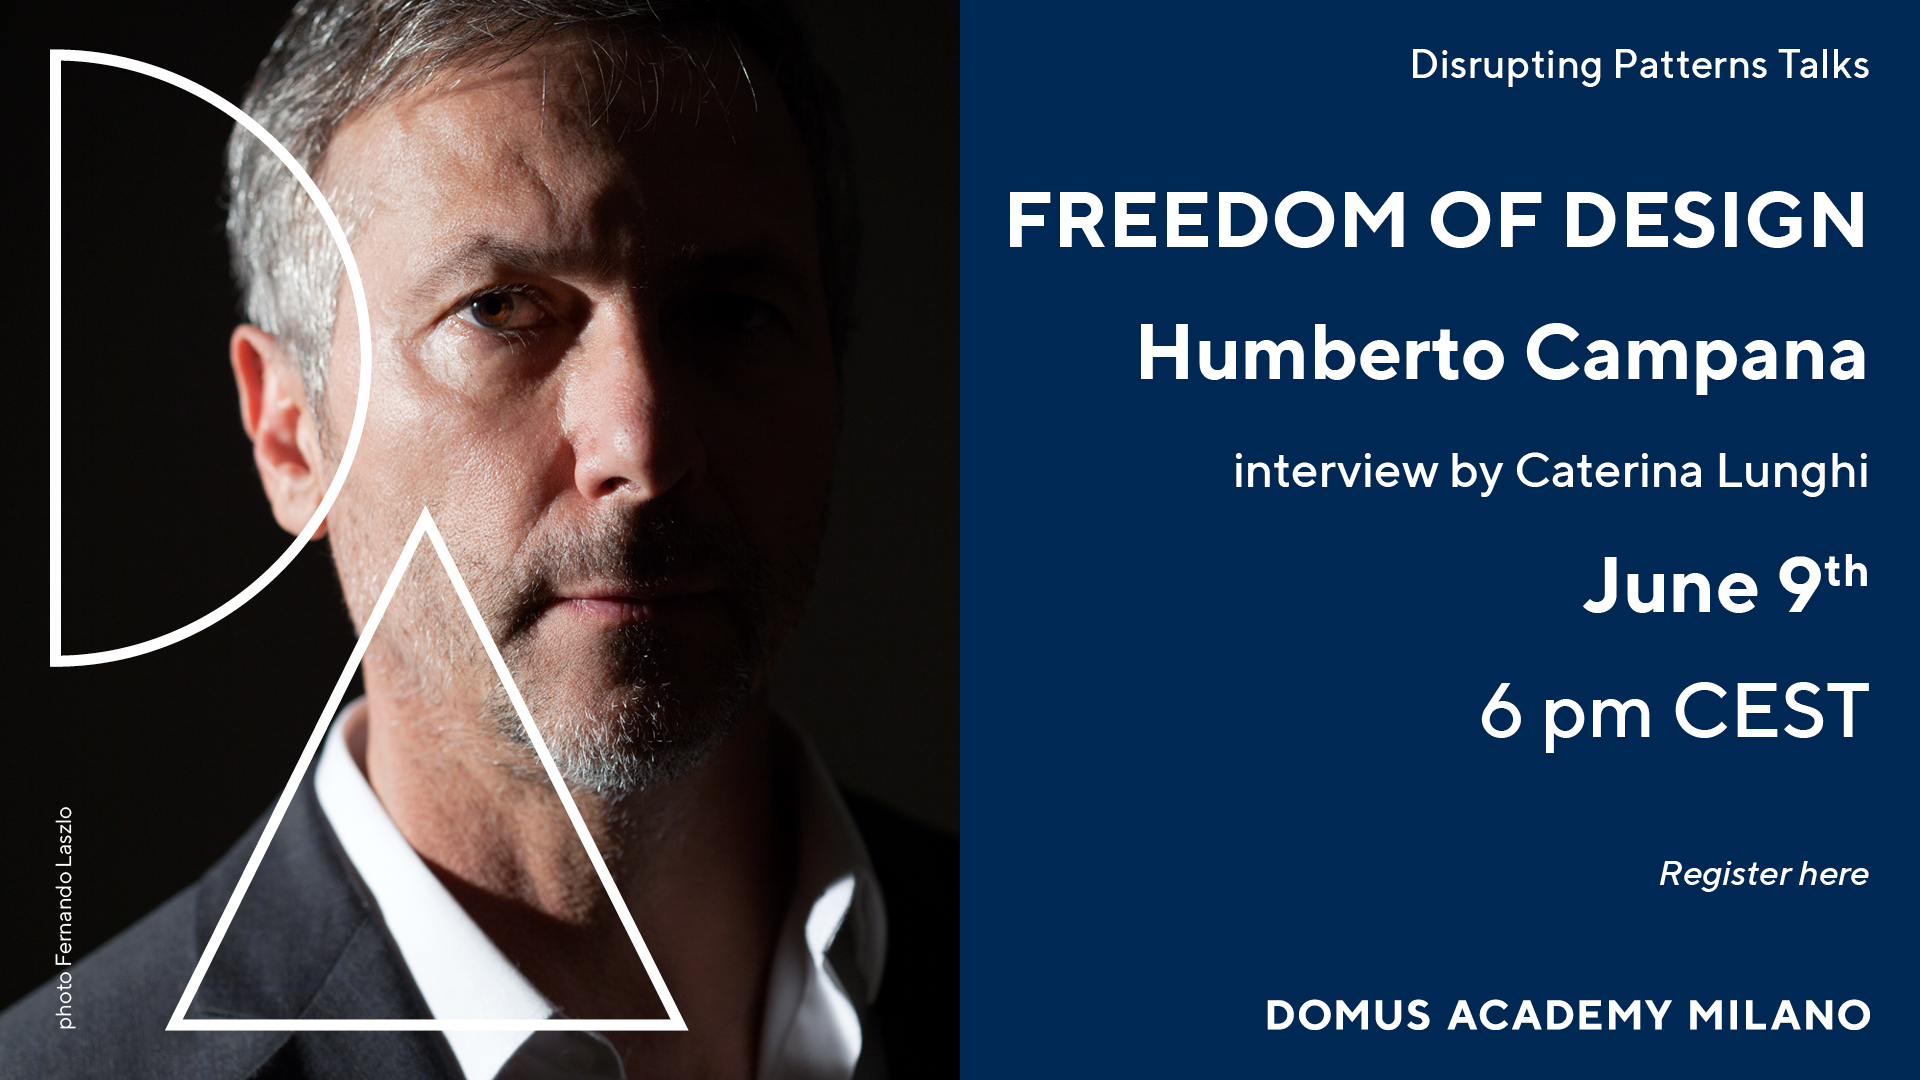 “Freedom of Design”: Domus Academy Milano ospita la talk con Humberto Campana